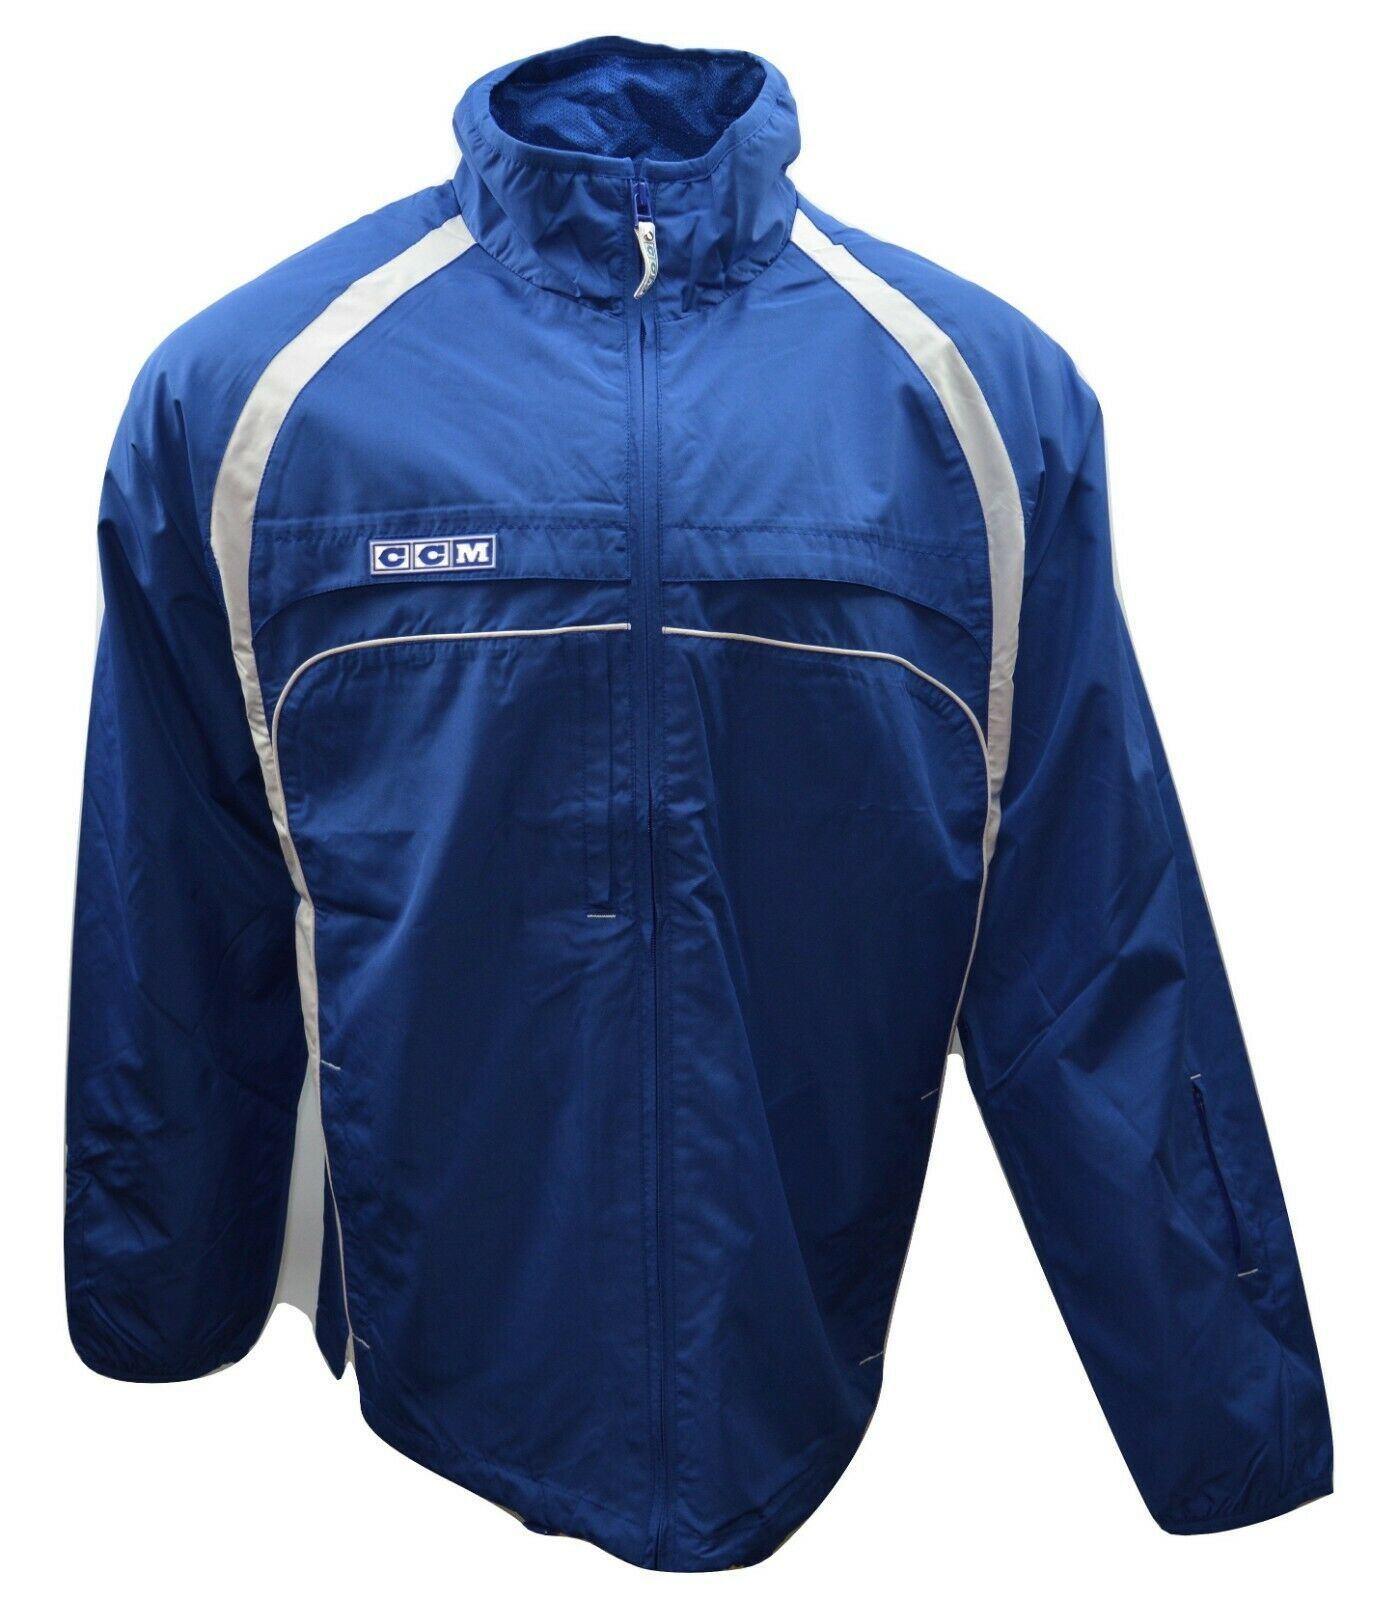 CCM 4660 Royal Blue Pro Skate Hockey Jacket XL - Coats, Jackets & Vests